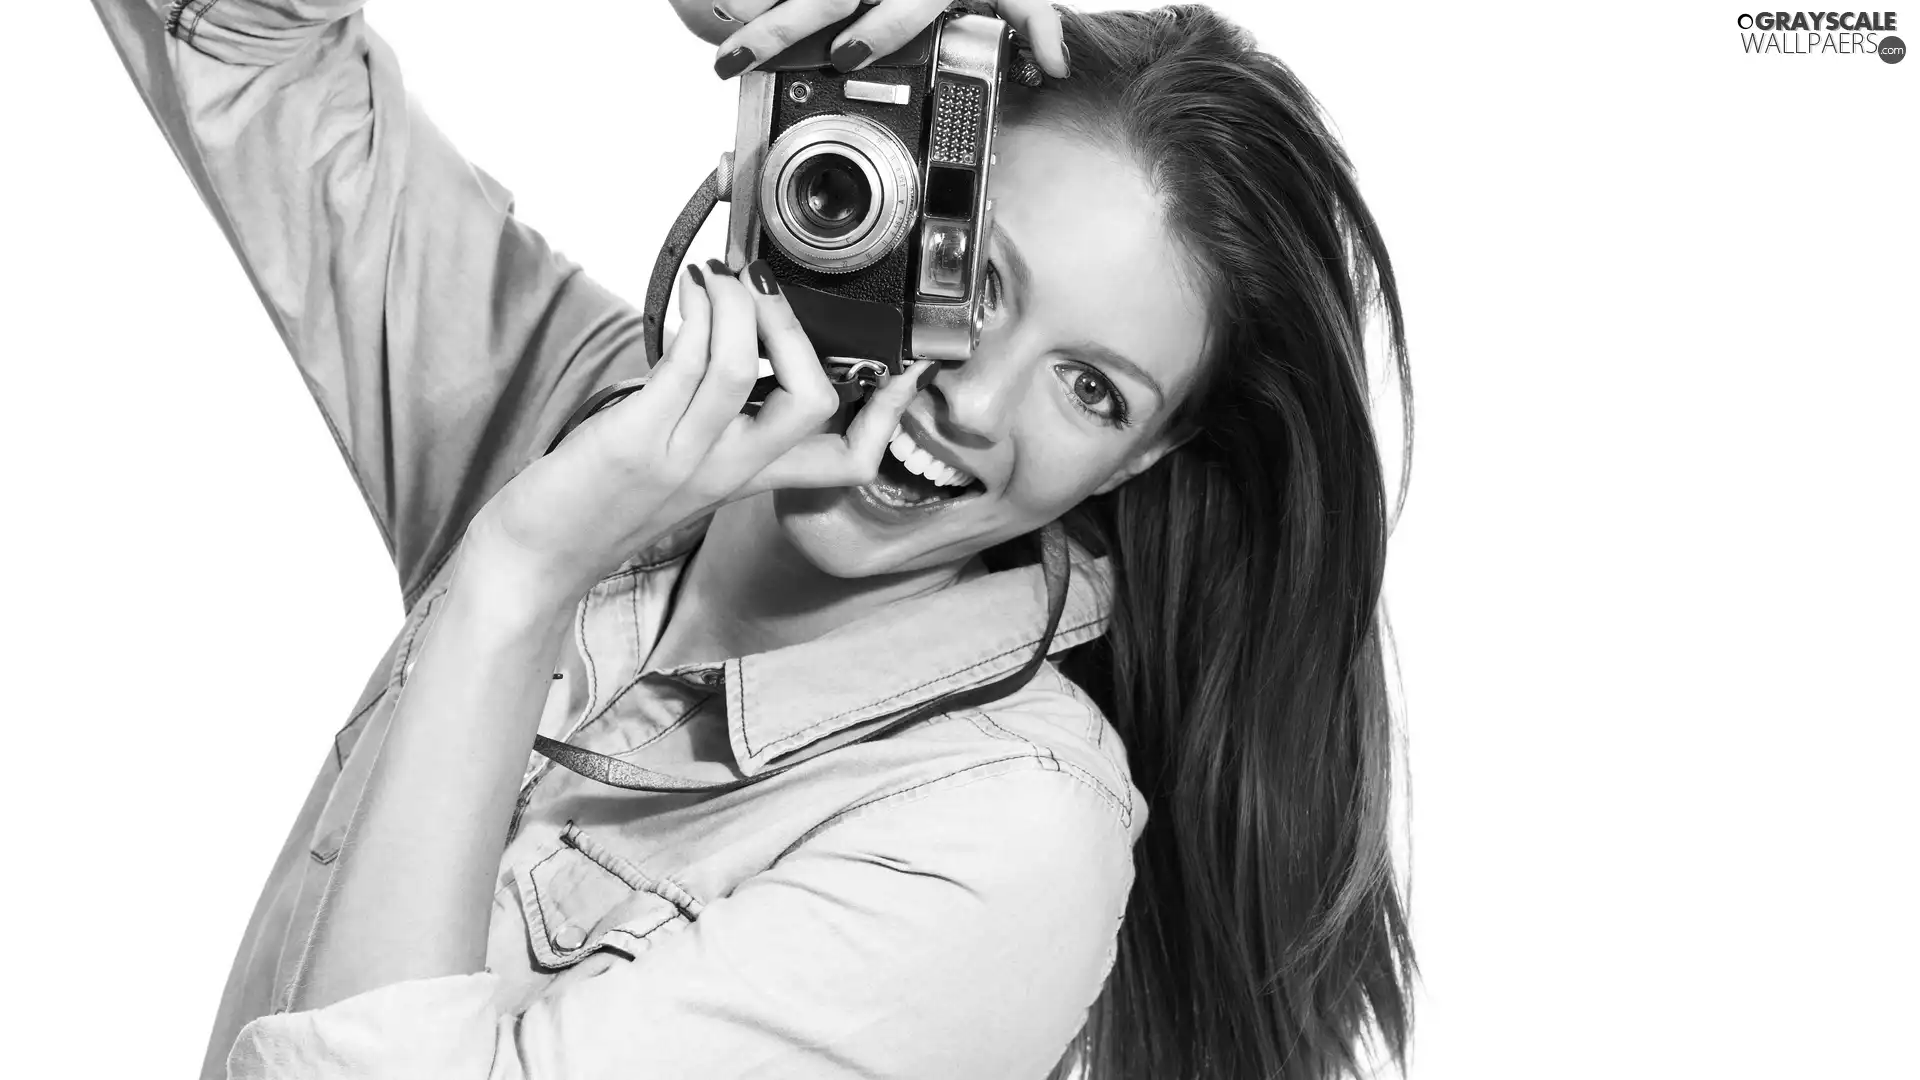 Camera, photographic, redhead, Women, Beauty